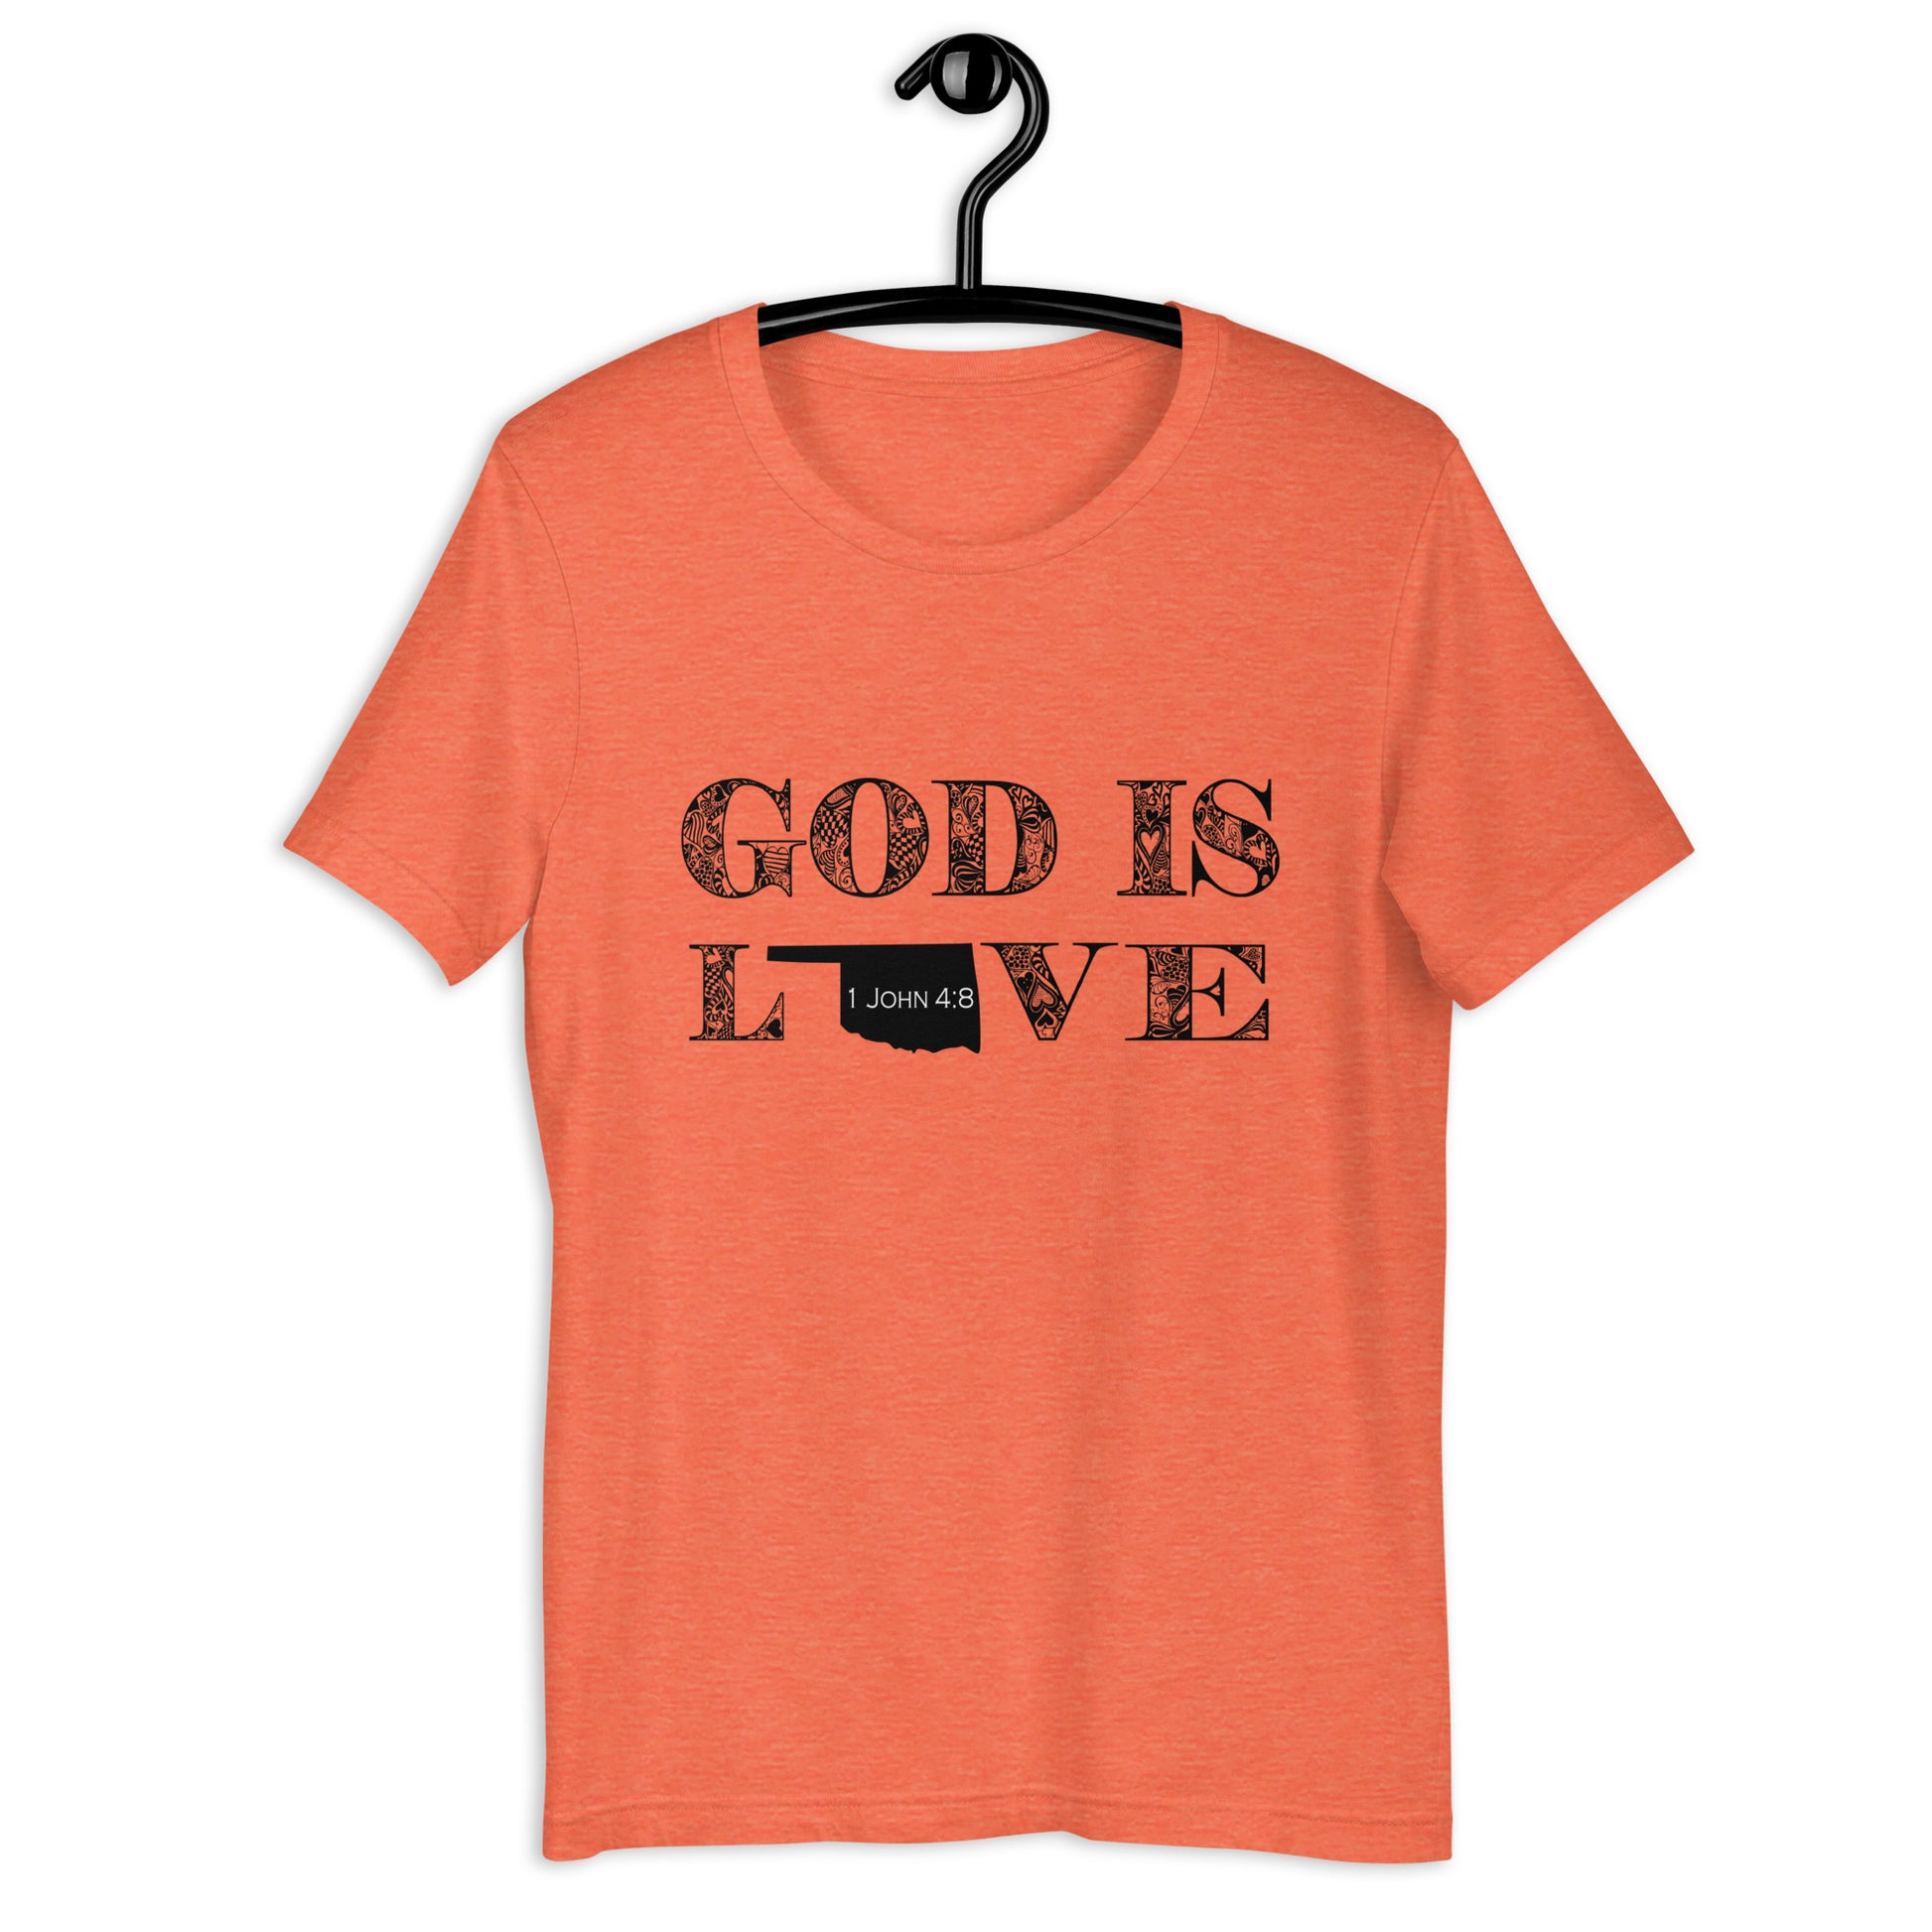 1 John 4:8 God is Love Unisex Oklahoma T-shirt in Heather Orange - front view on hanger